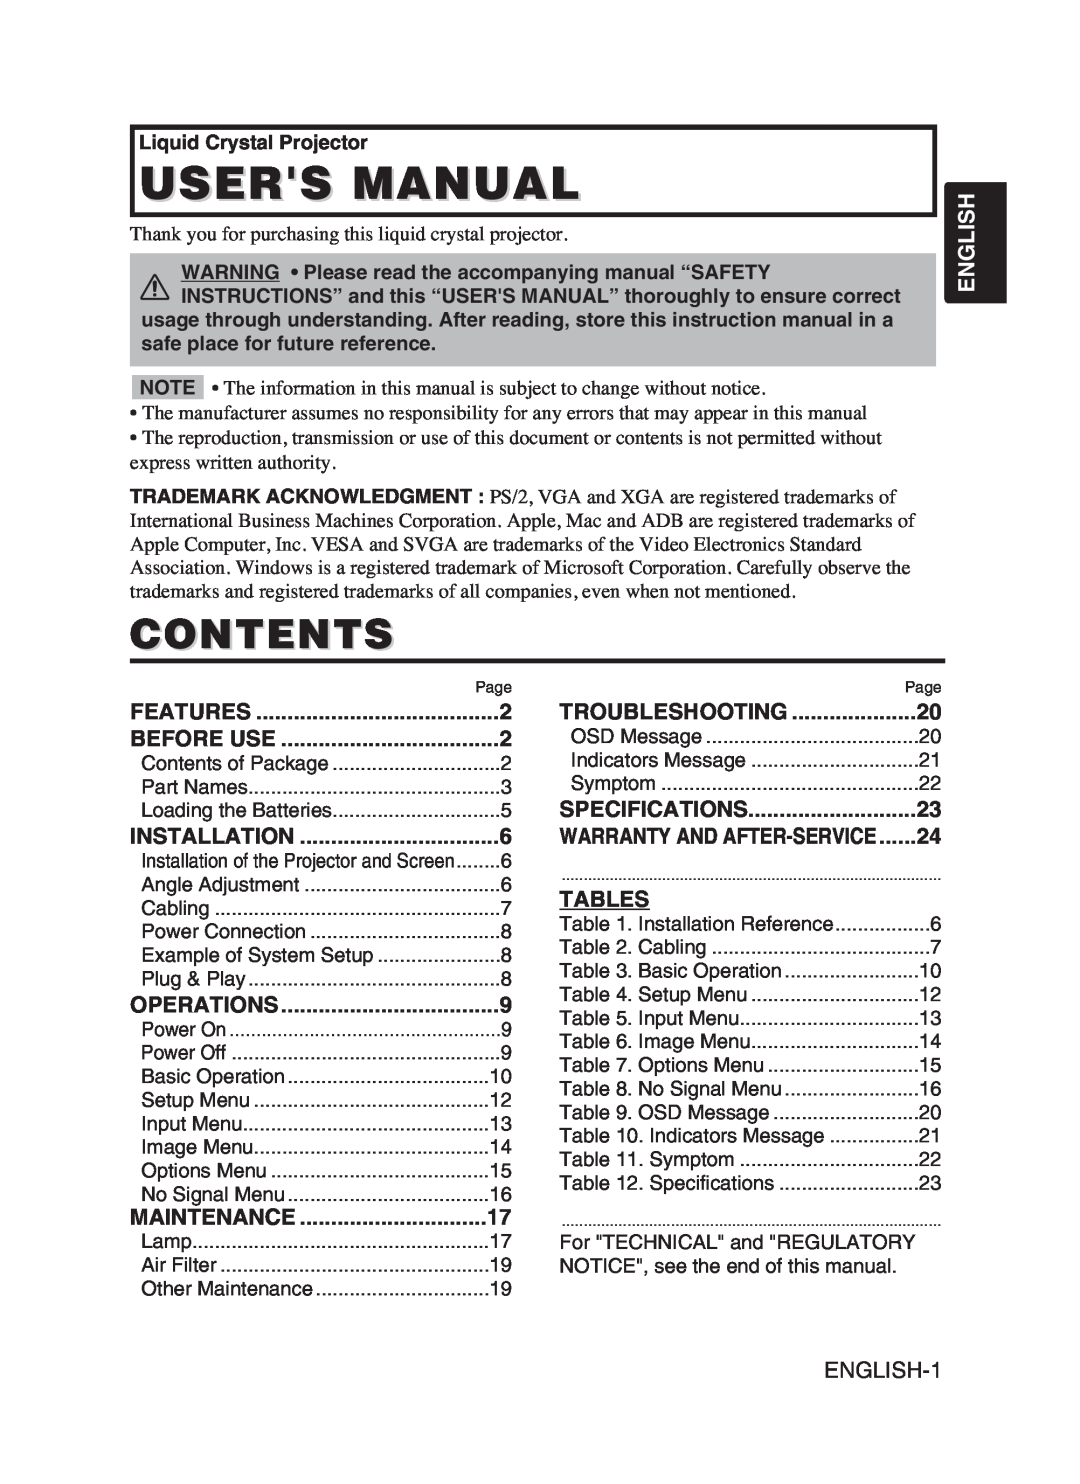 Hitachi CP-SX5600W user manual Contents, Tables, English 